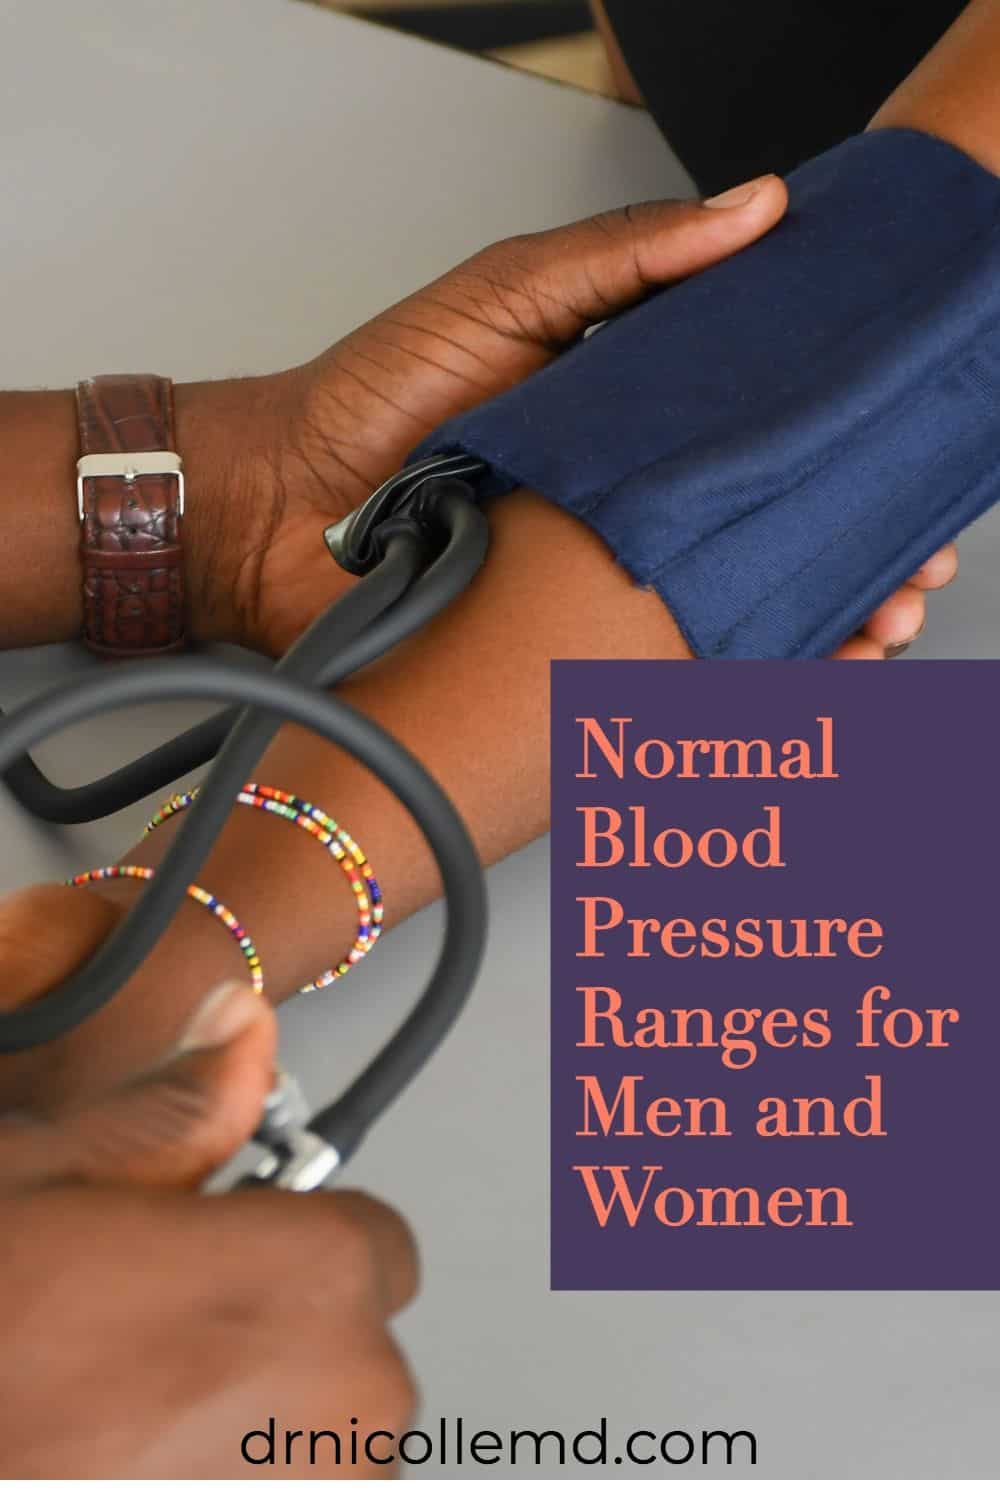 Normal Blood Pressure Ranges